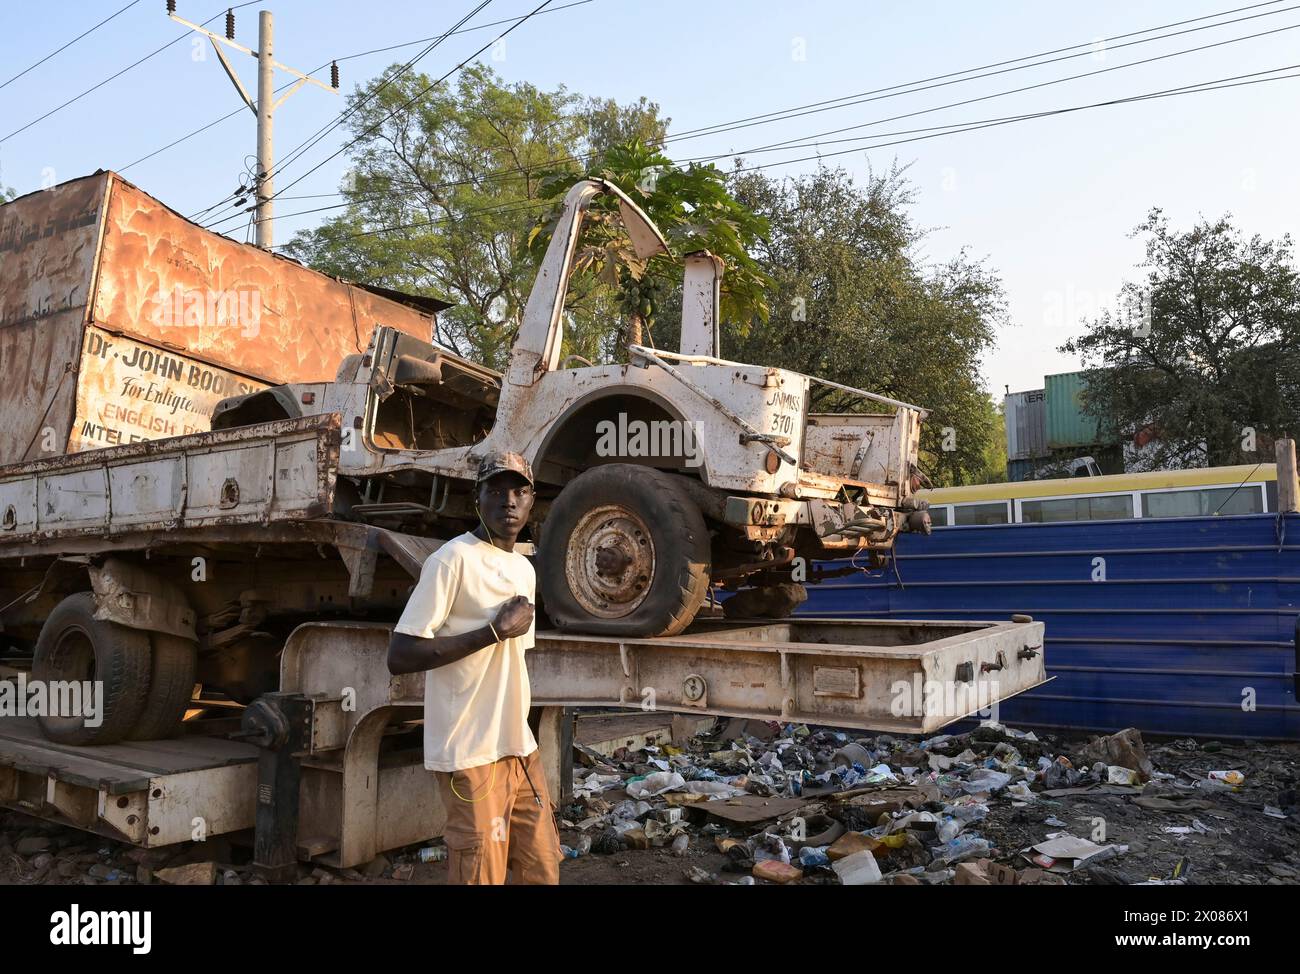 SOUTH-SUDAN, capital city Juba, scrap cars and garbage on the road, jeep of UN organization UNMISS / SÜDSUDAN, Hauptstadt Juba, Straßenszene, Schrotthandel Stock Photo